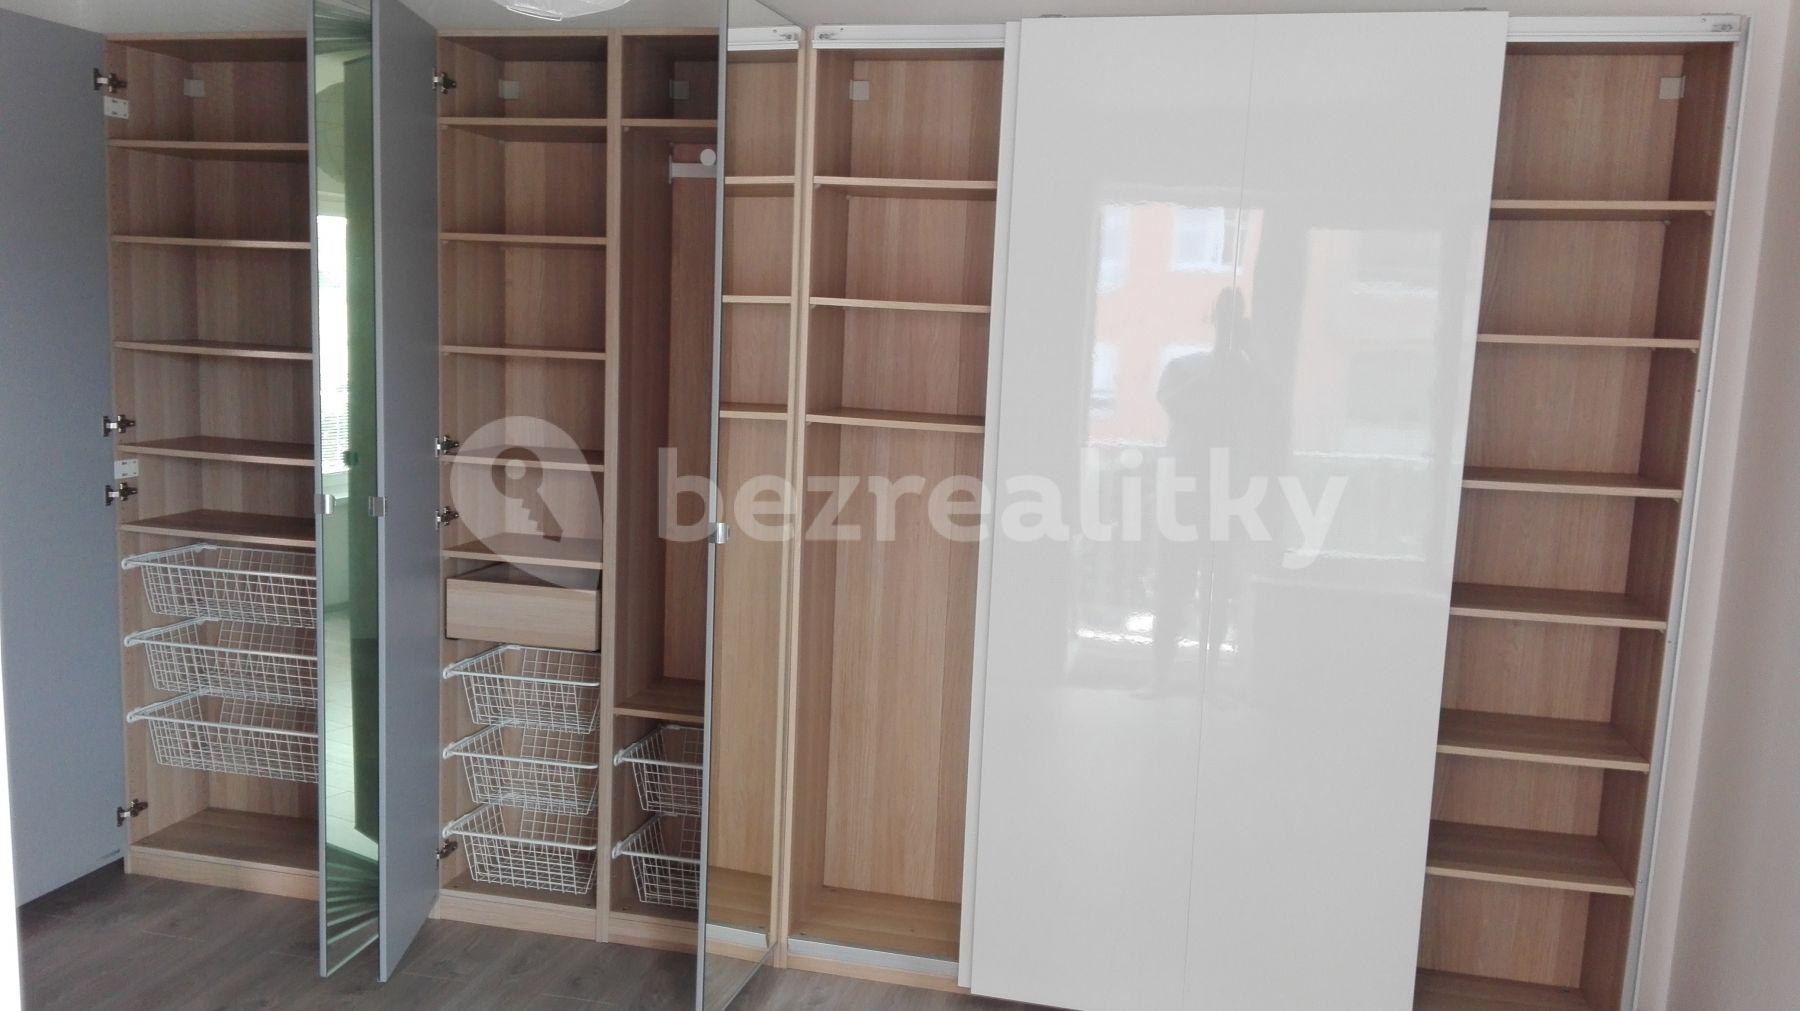 1 bedroom with open-plan kitchen flat to rent, 53 m², Rudolfa Holeky, Prague, Prague